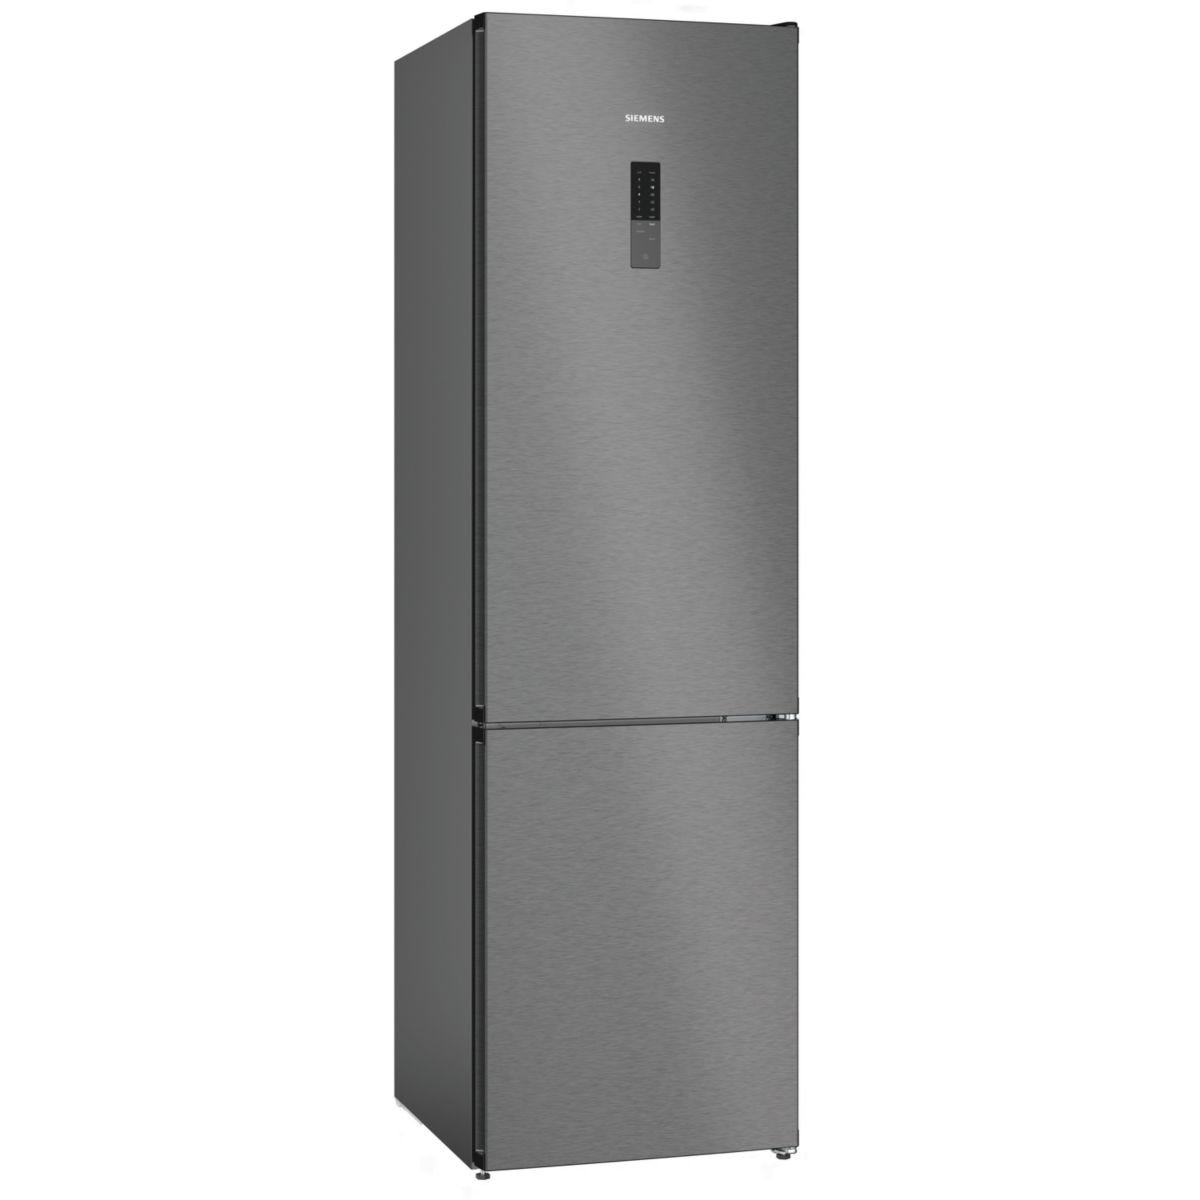 Réfrigérateur combiné SIEMENS KG39NXXDF IQ300 HyperFresh 0